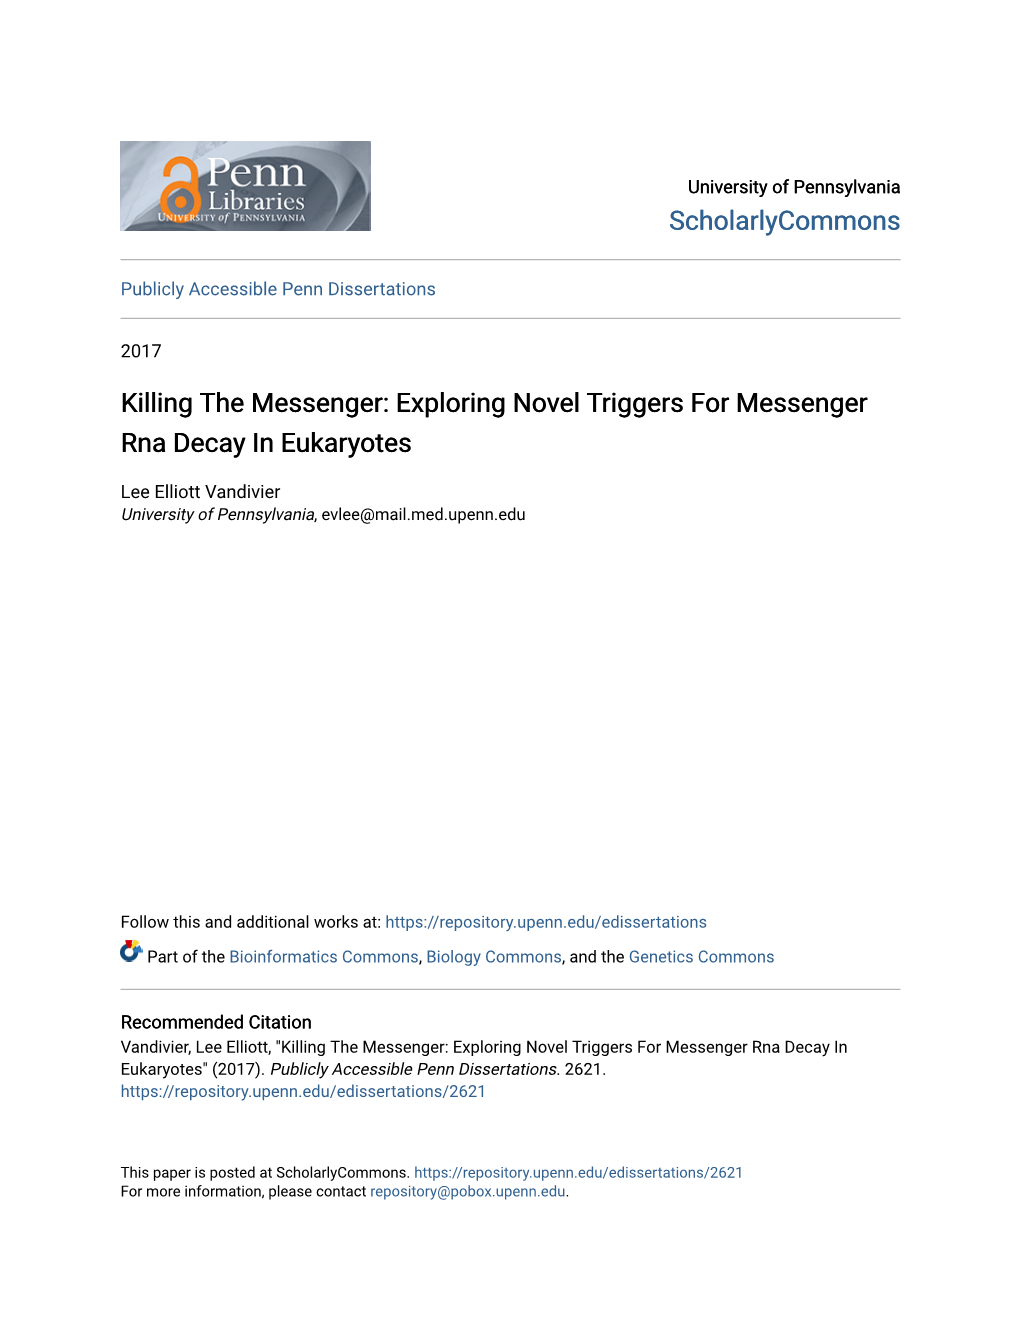 Exploring Novel Triggers for Messenger Rna Decay in Eukaryotes